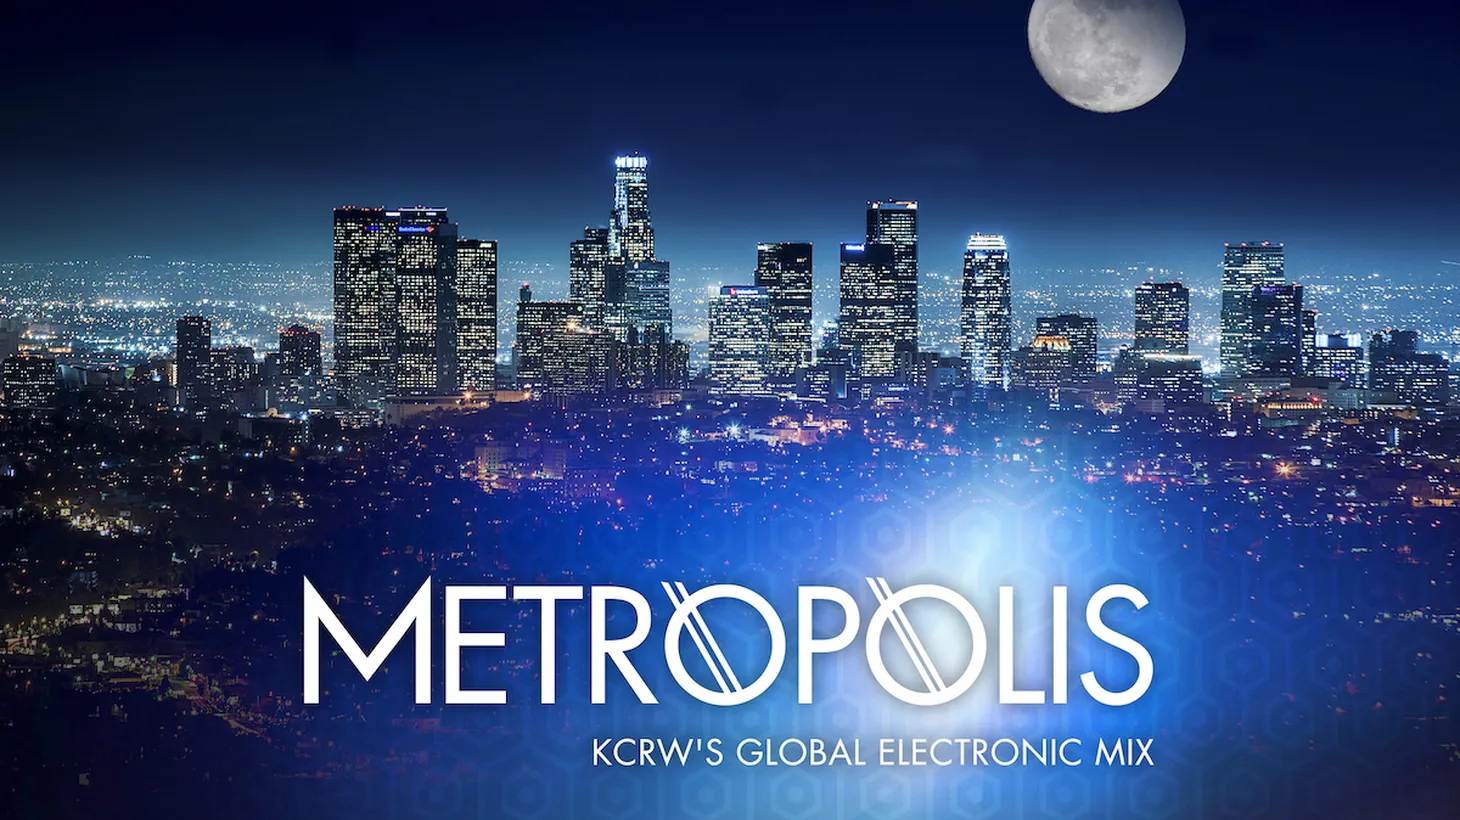 Metropolis playlist, March 13, 2021.